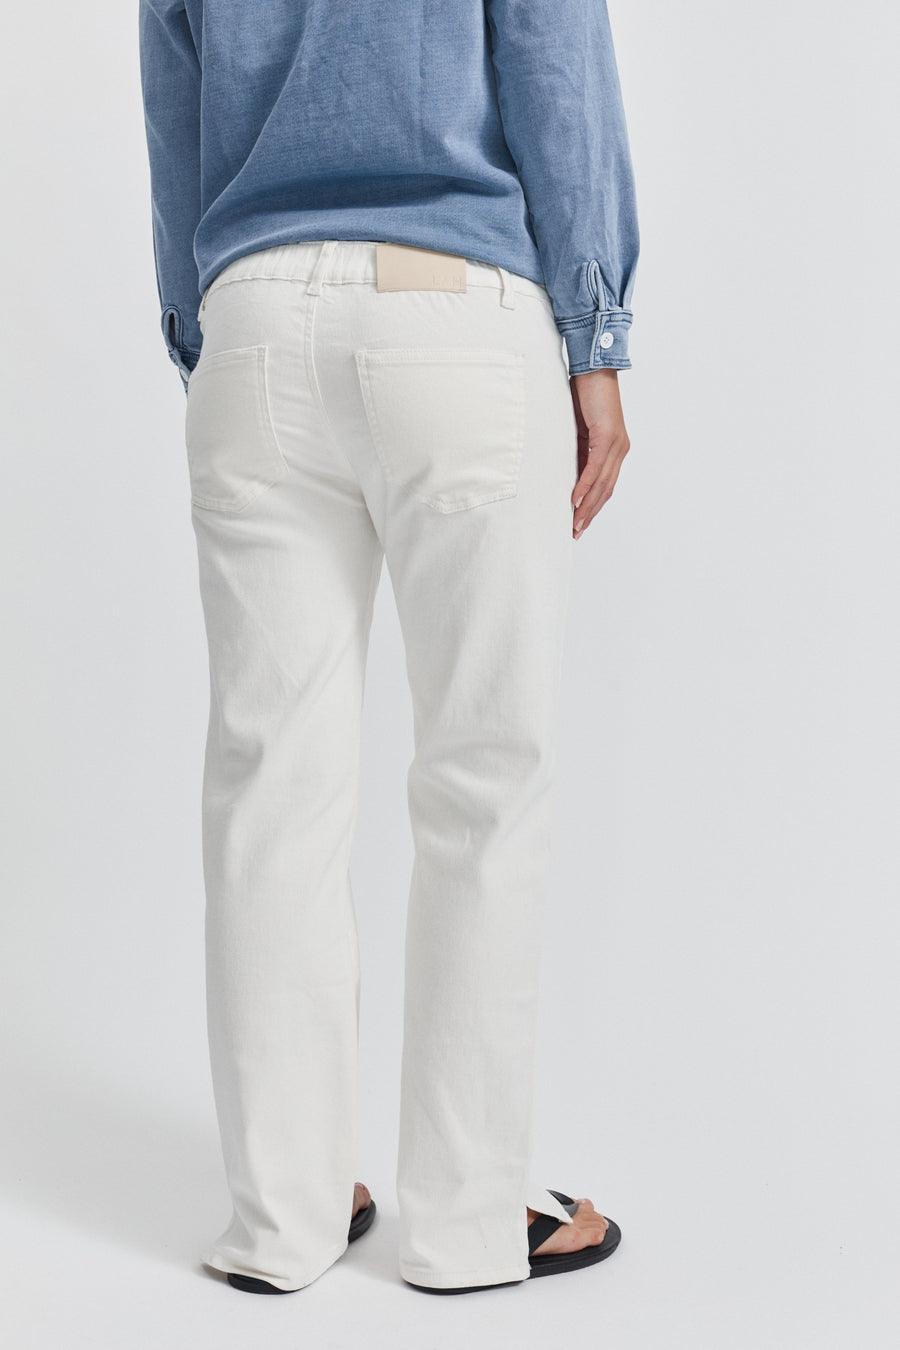 Stylish Maternity Jeans (White) 2